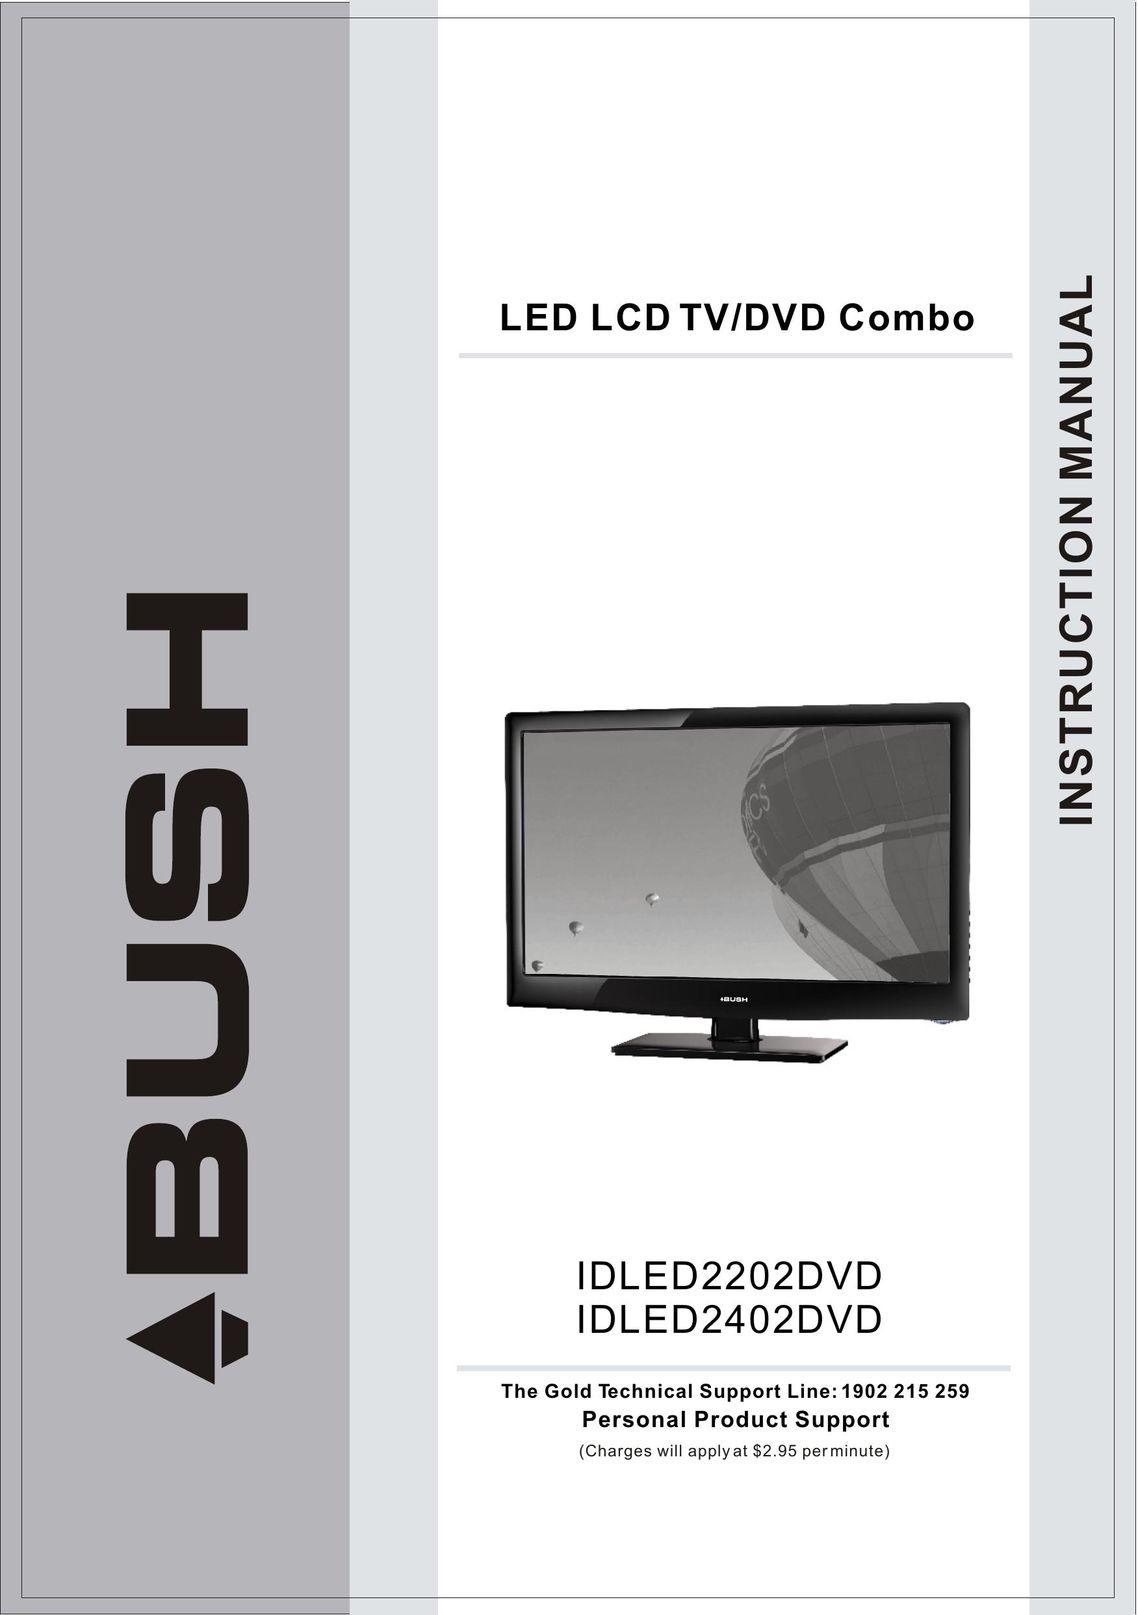 BUSH IDLED2402DVD Flat Panel Television User Manual